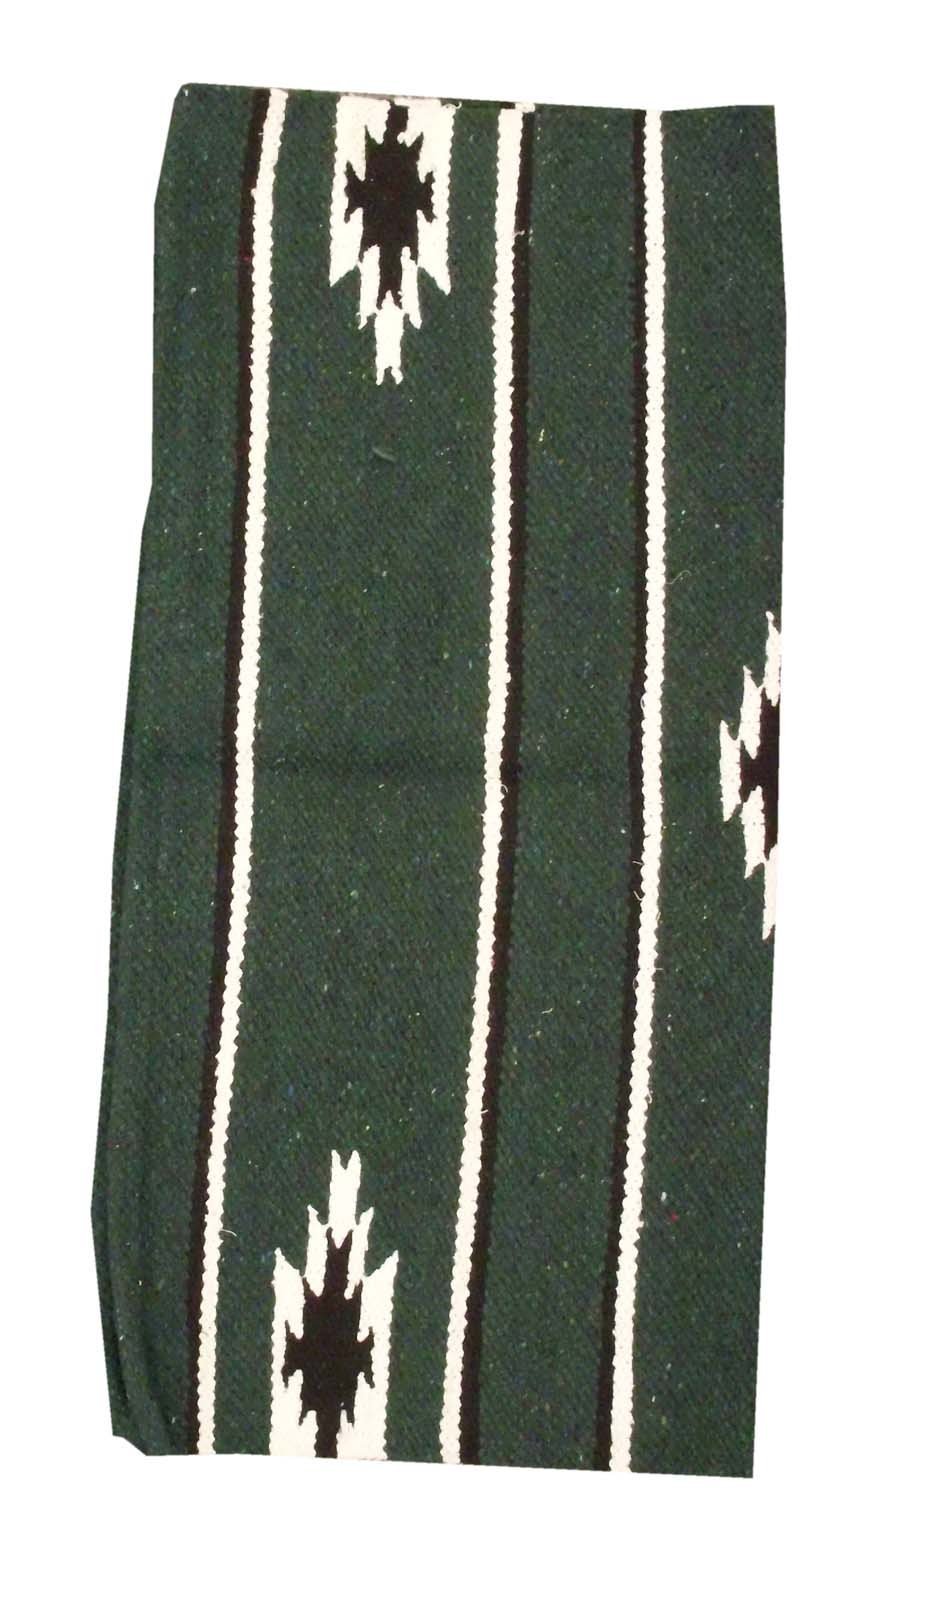 AMKA Westernpad grün Pony Sattel Navajo Decke 26 x 26 Inch, 66 x 66 cm Western Satteldecke für Ponysättel Saddle Blanket